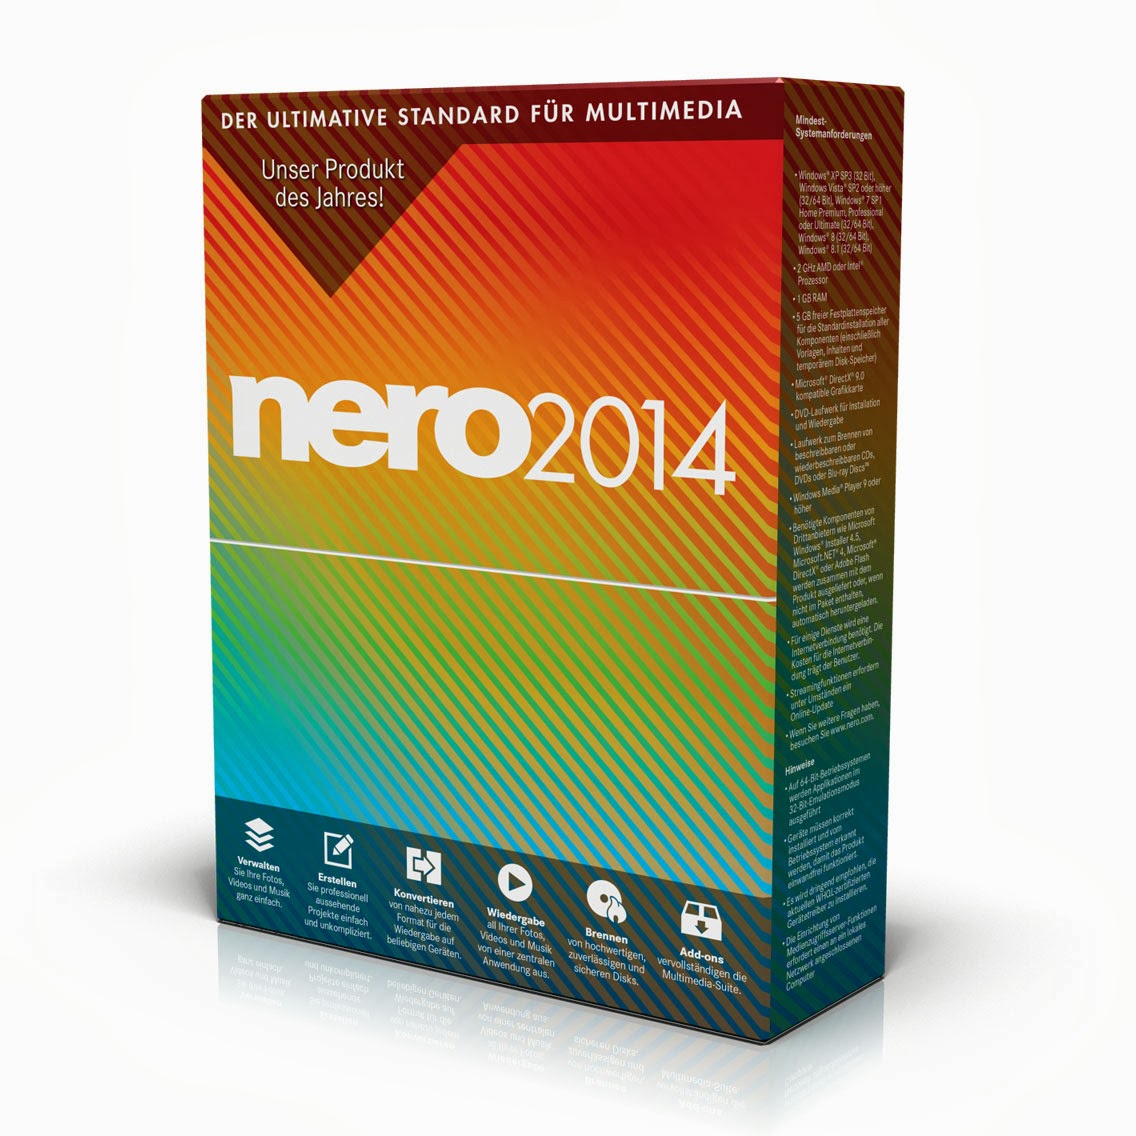 nero 12 platinum patch free download